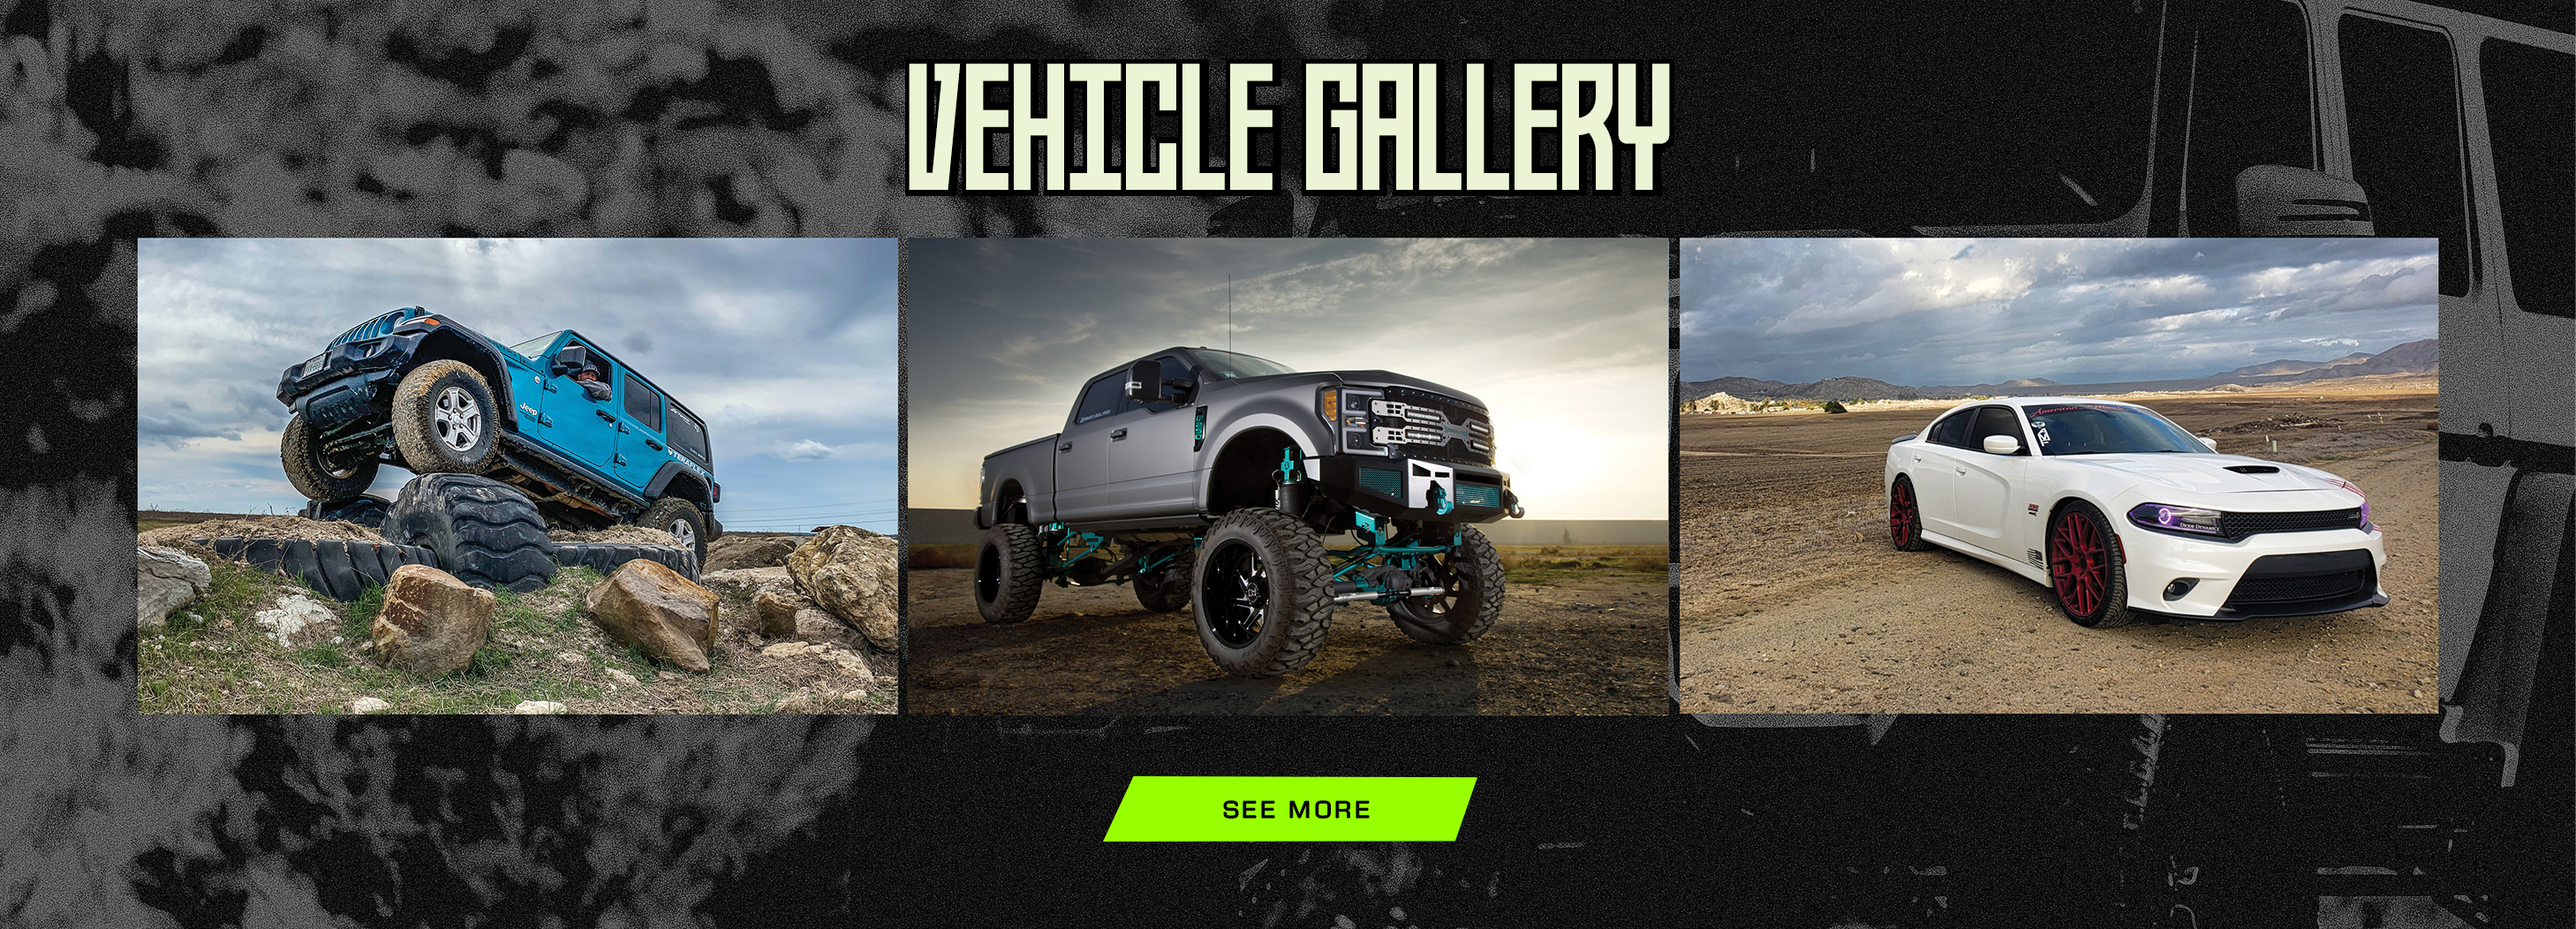 vehicle gallery